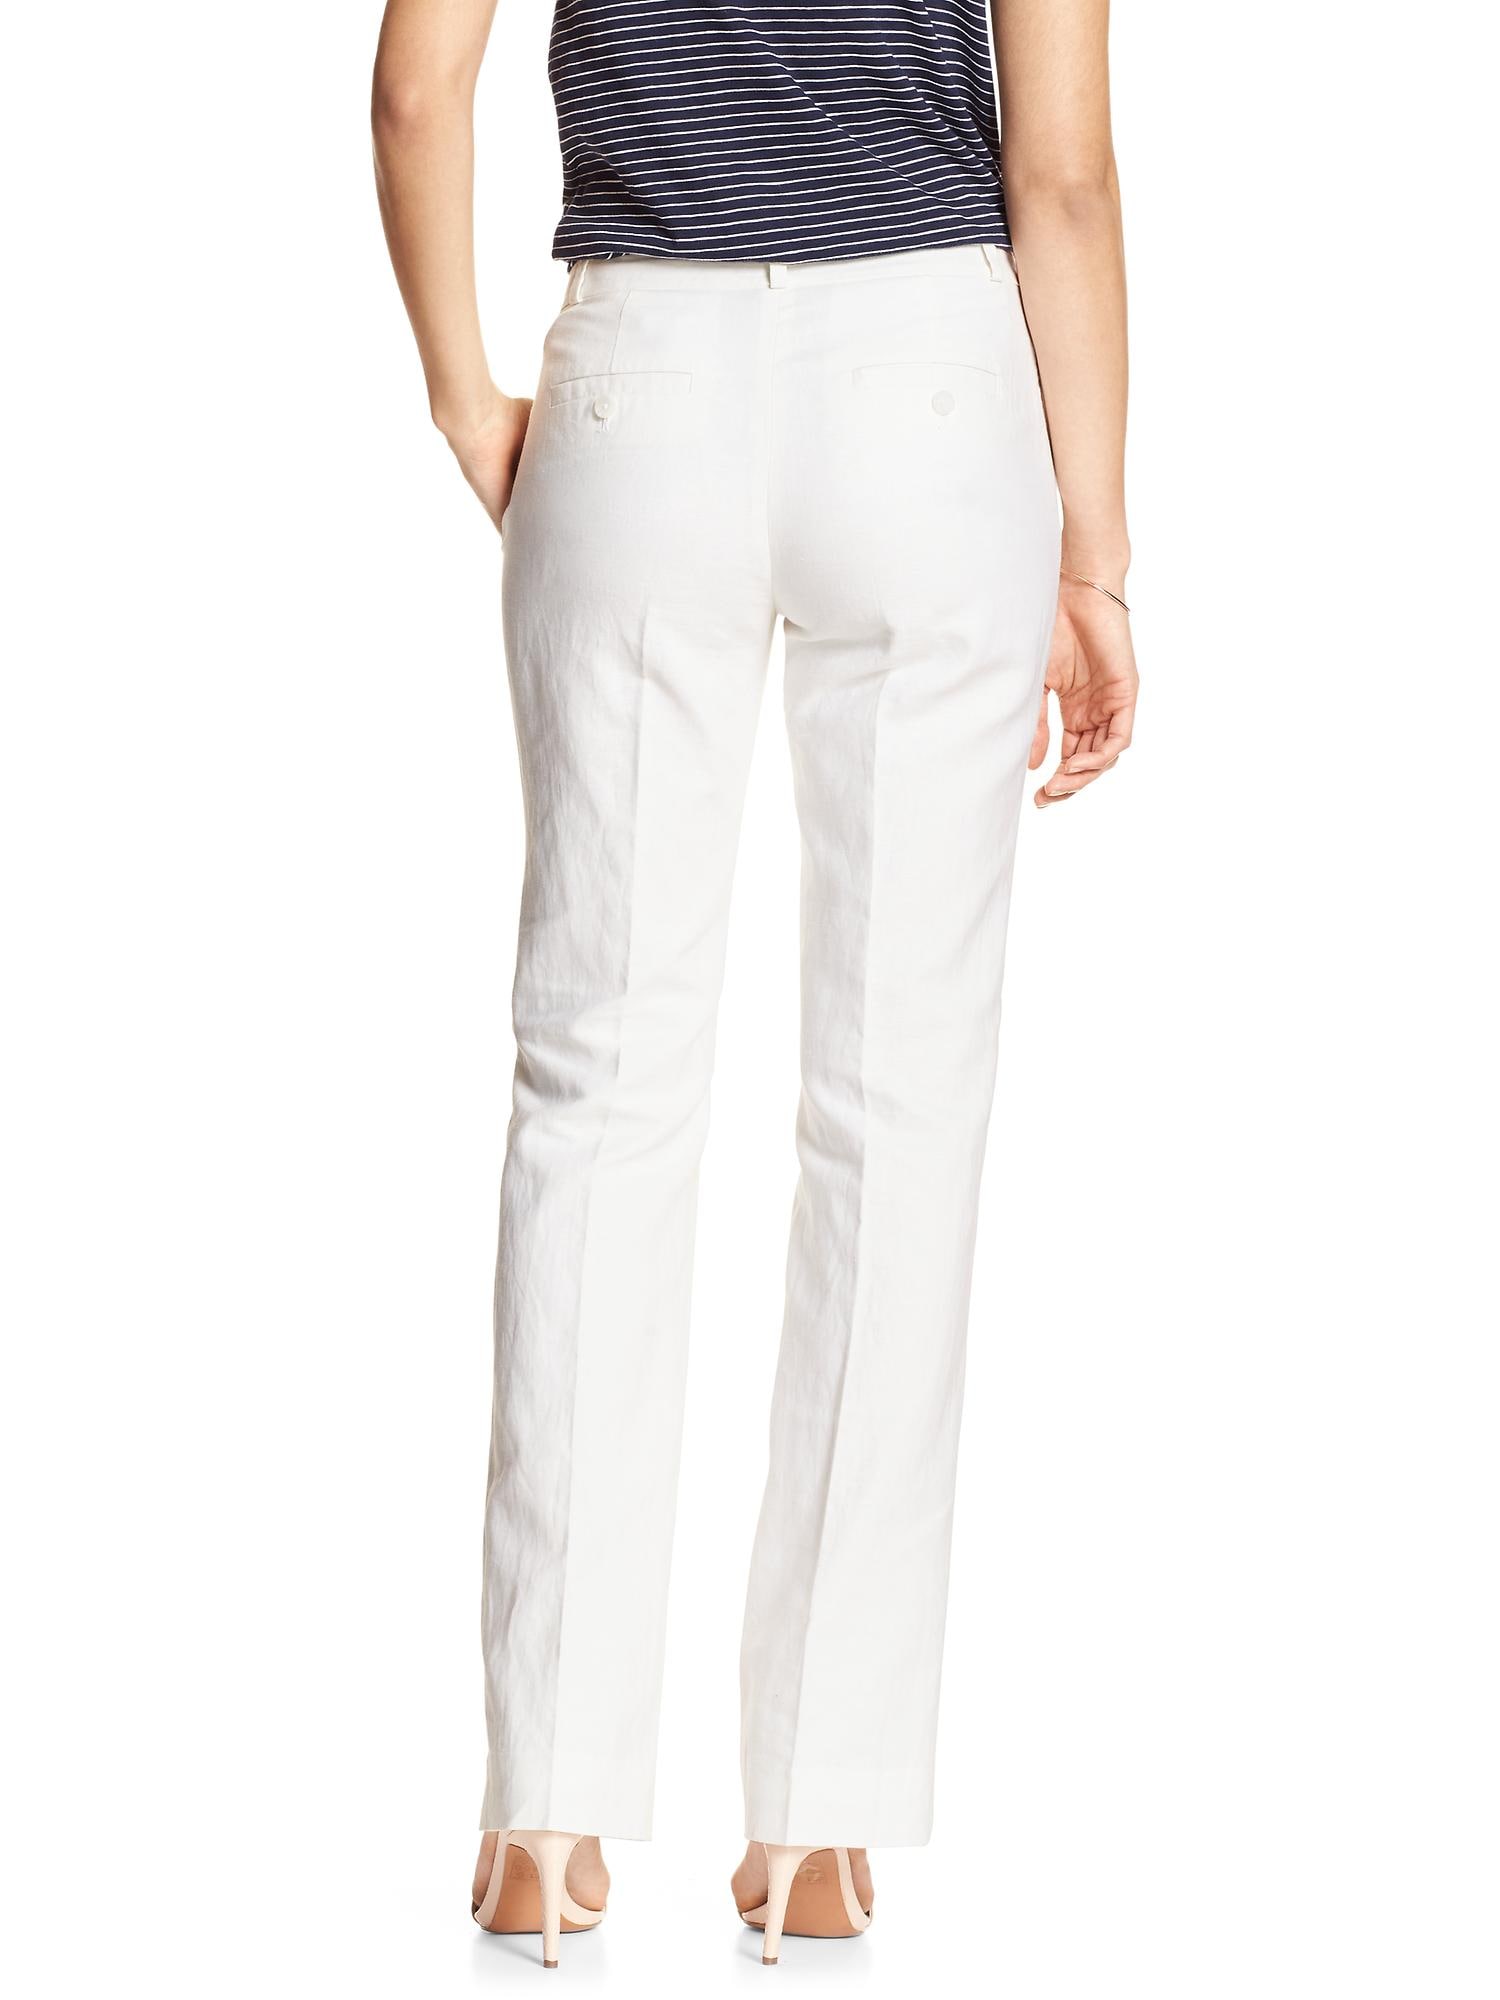 Logan White Linen/Cotton Tailored Trouser | Banana Republic Factory